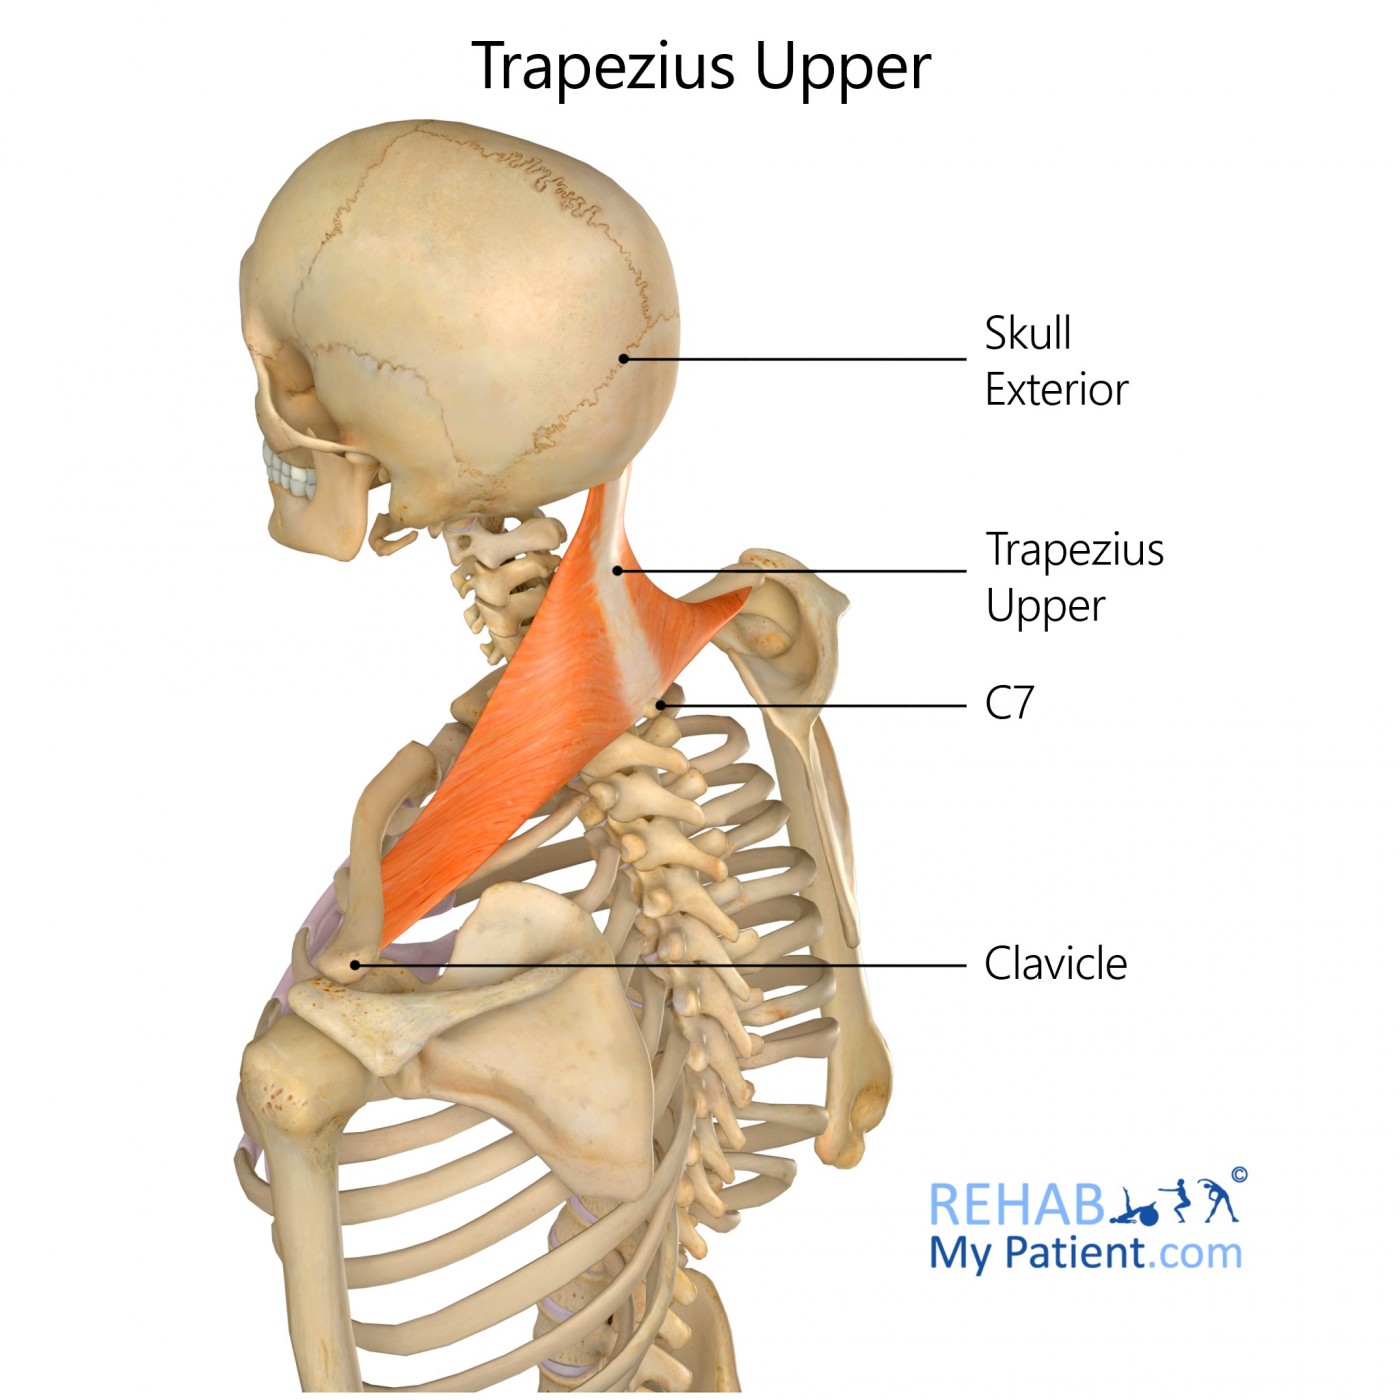 Trapezius Lower